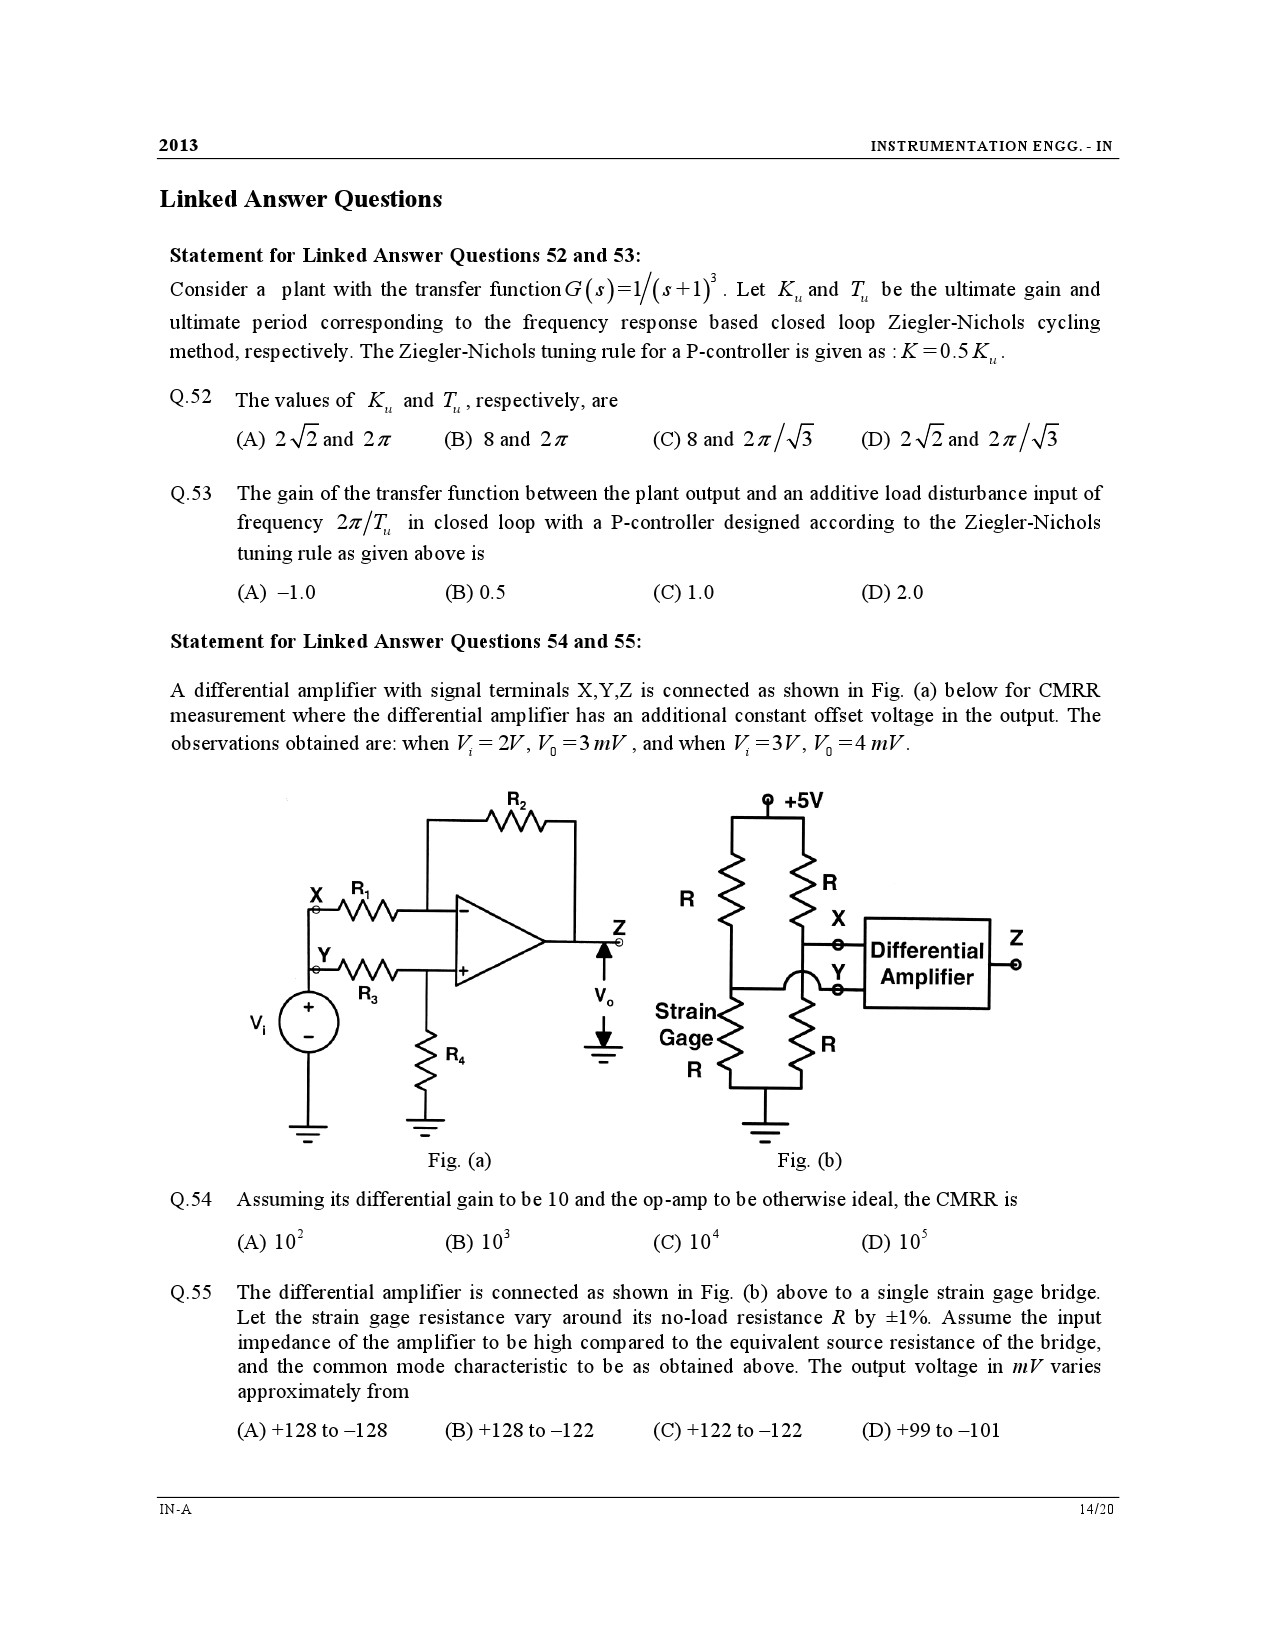 GATE Exam Question Paper 2013 Instrumentation Engineering 14